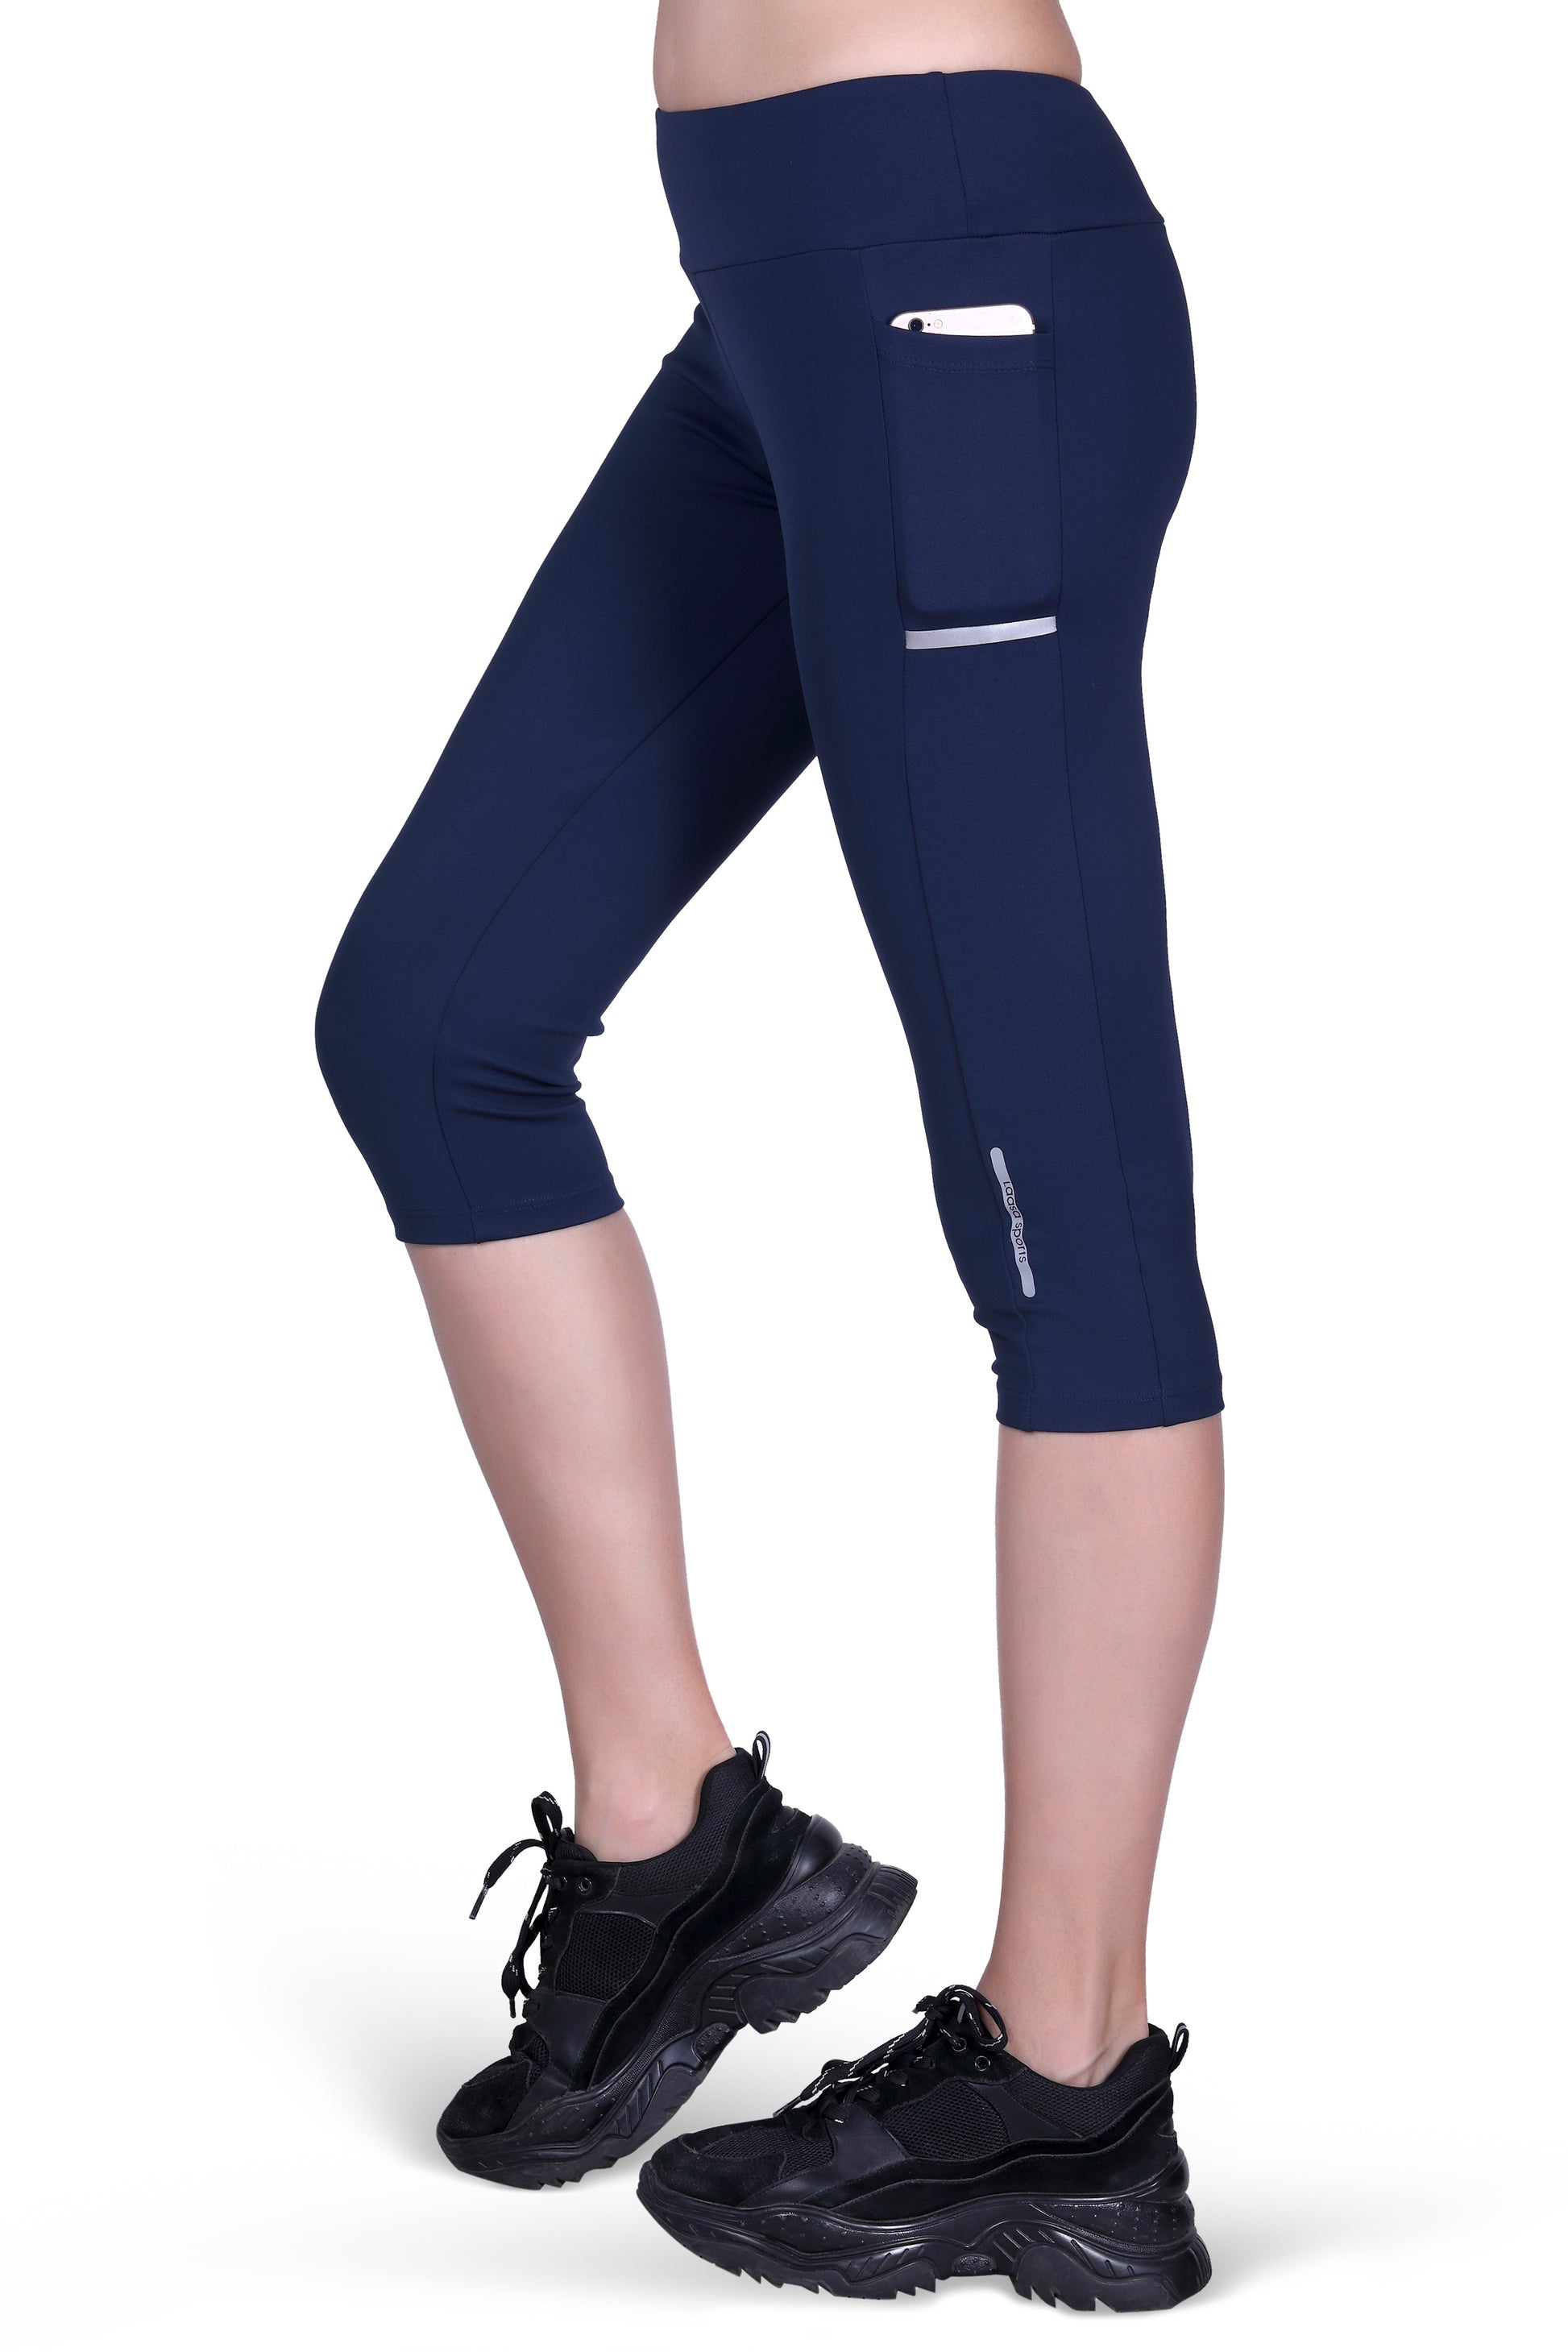 Mid-Rise Capri Fitness Leggings with Side Pockets - Navy / Small / Medium